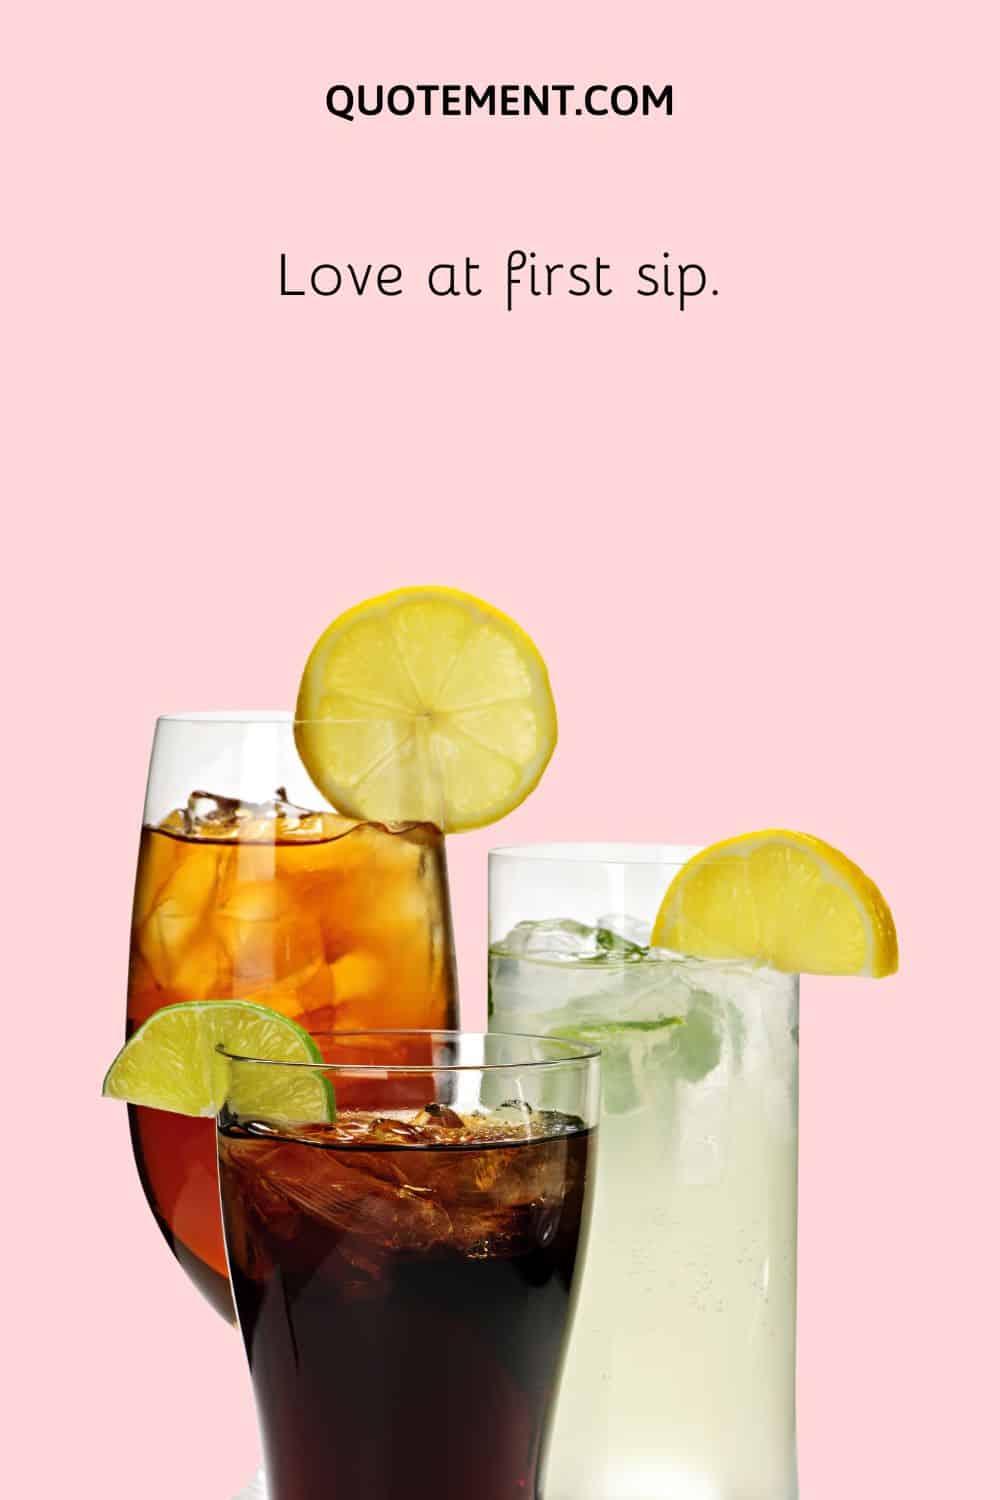 Love at first sip